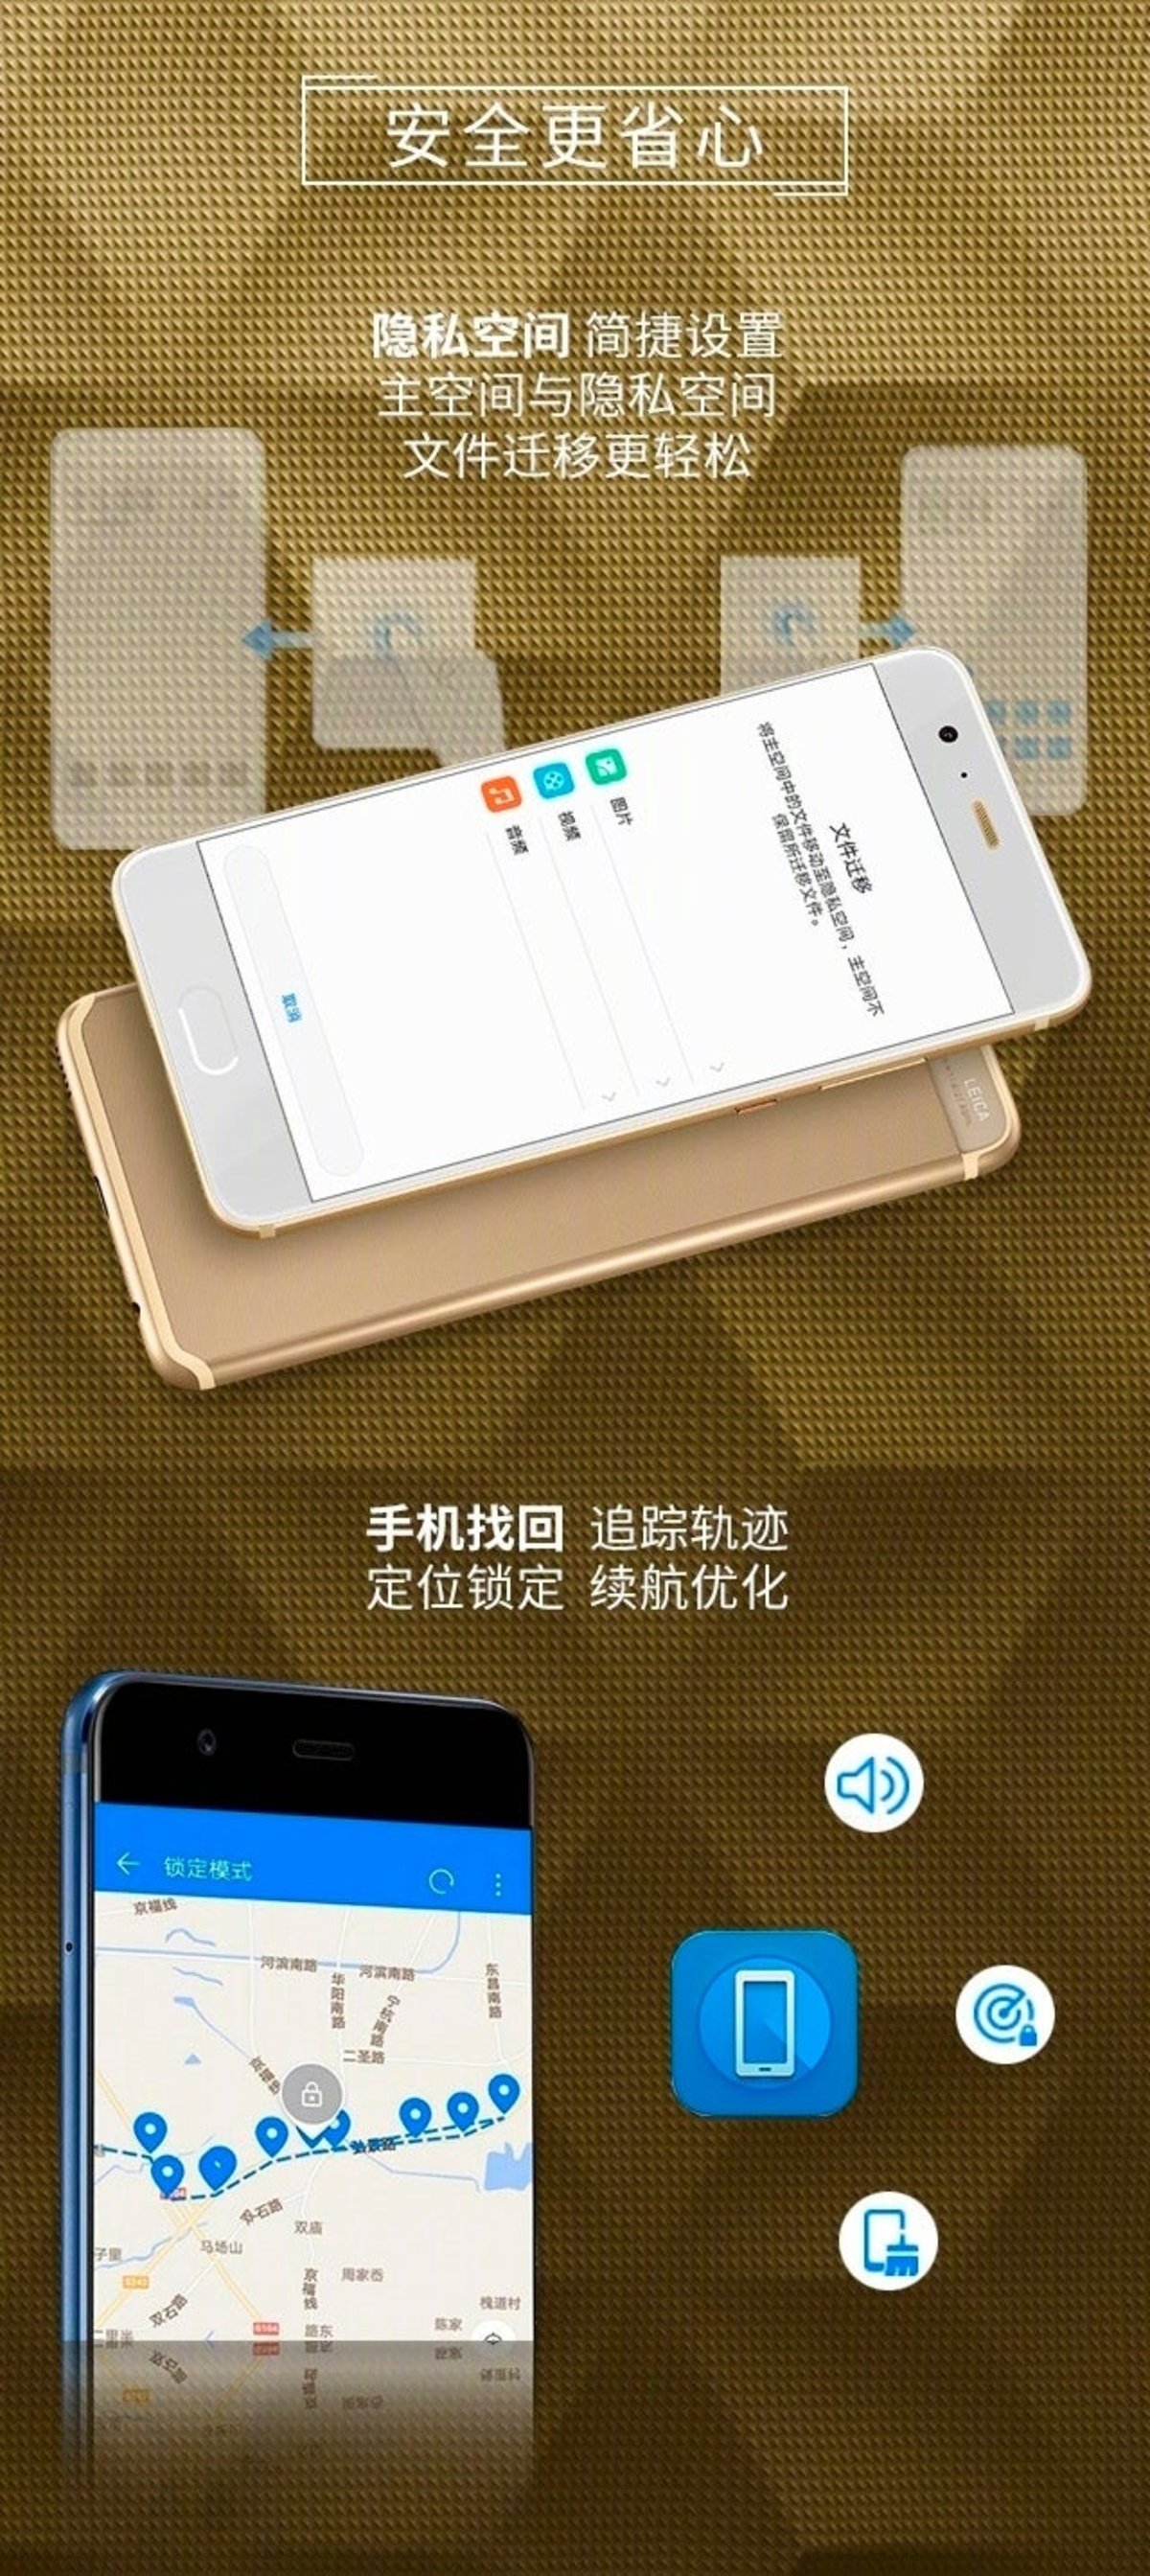 huawei-p10-android-oreo-6